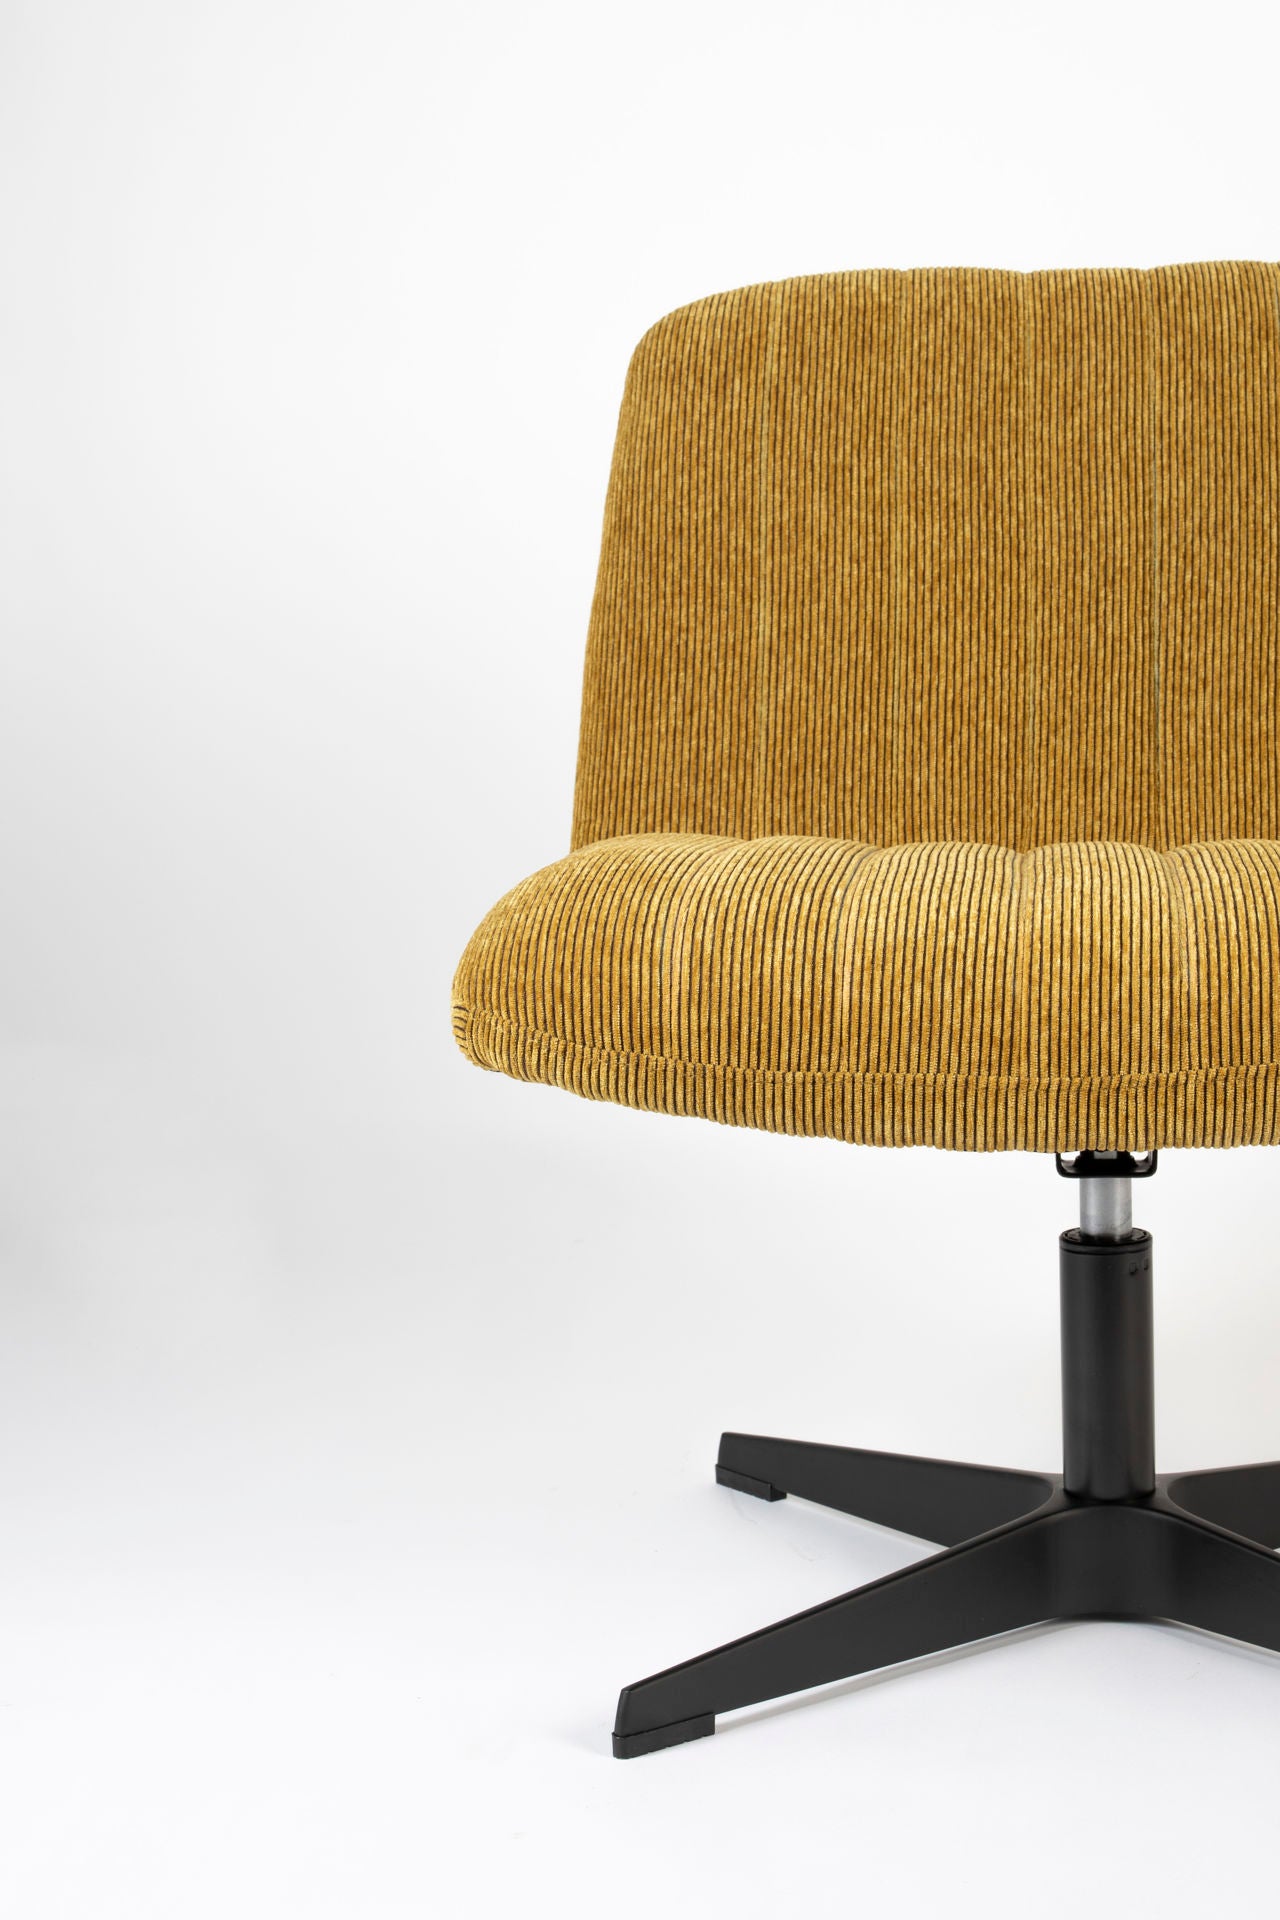 Nancy's Accokeek Lounge Chair - Industrial - Yellow - Polyester, Plywood, Steel - 71 cm x 65 cm x 72.5 cm